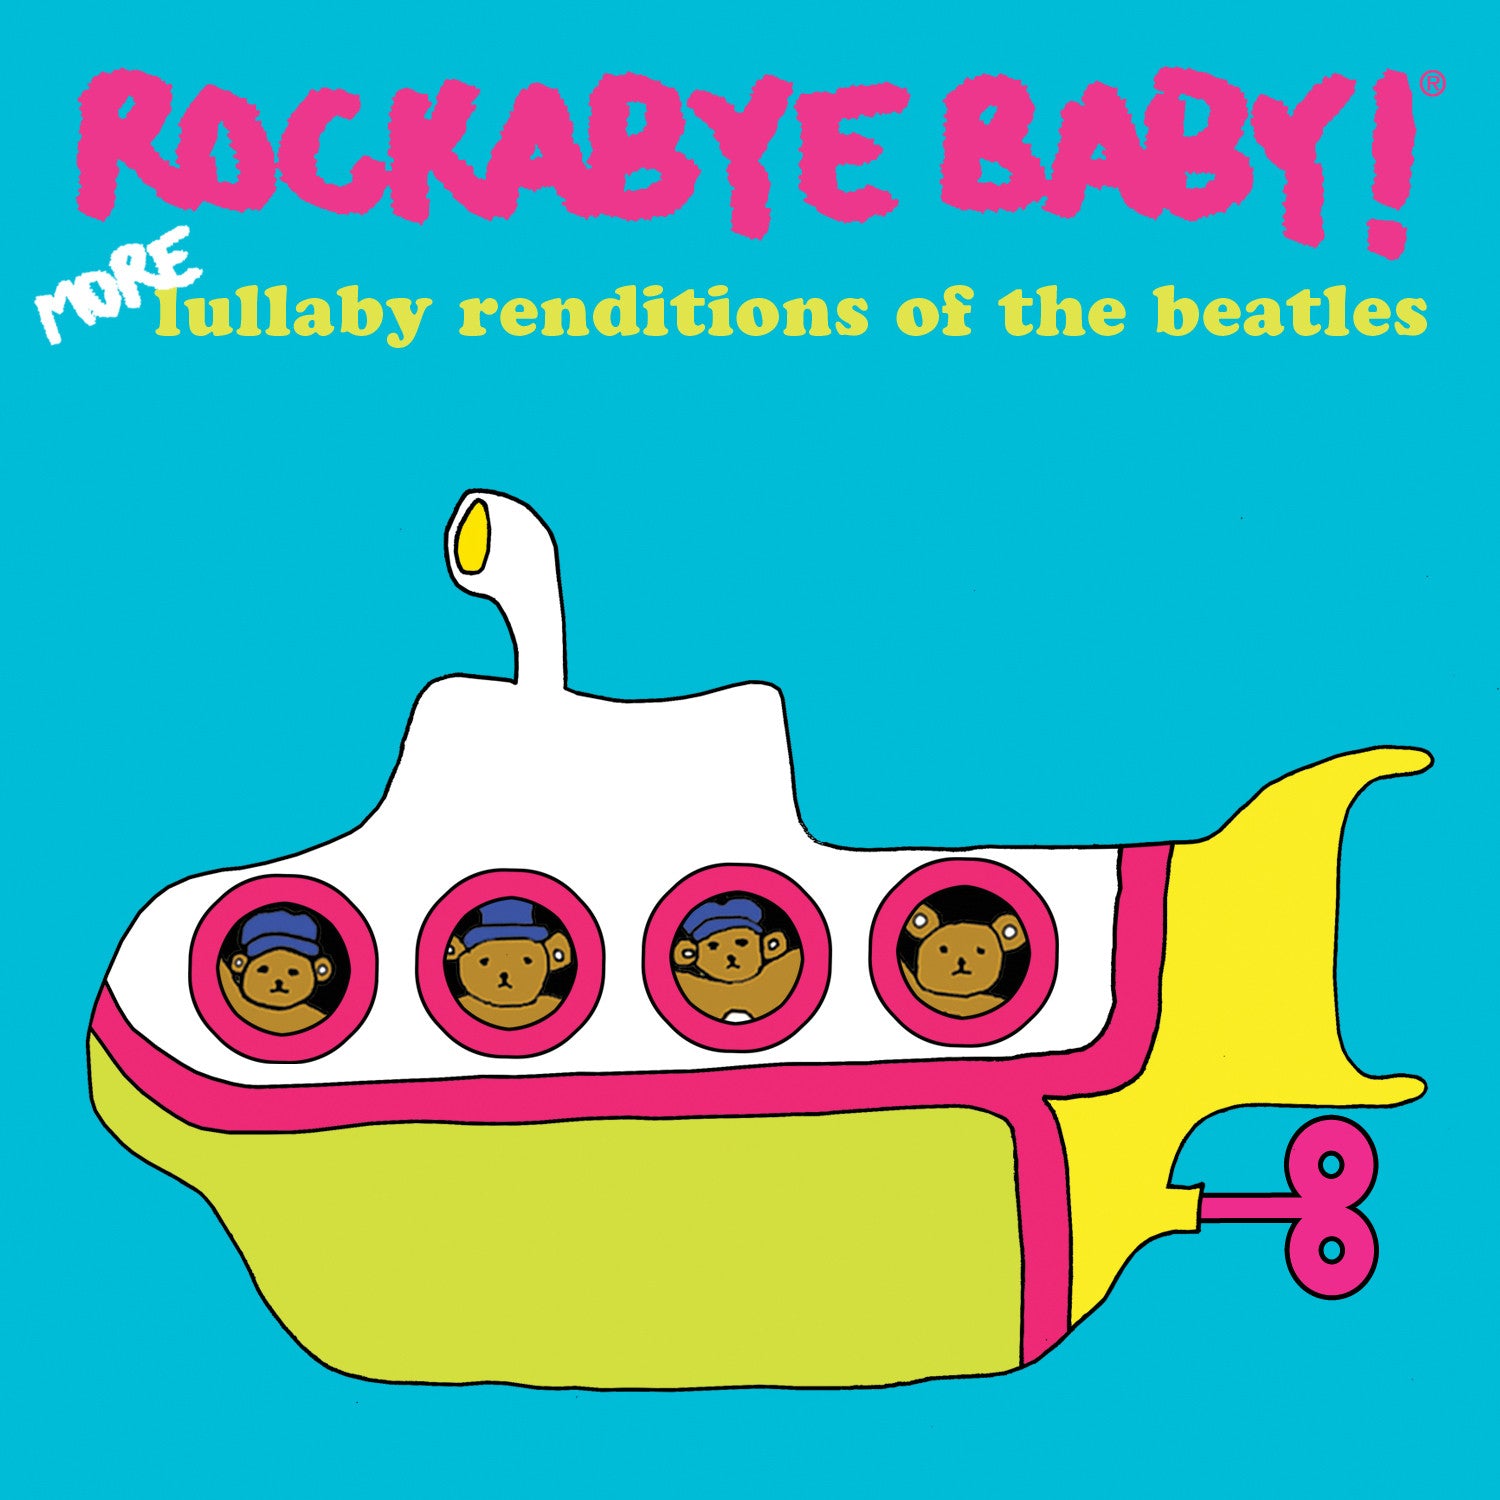 rockabye baby more lullaby renditions beatles